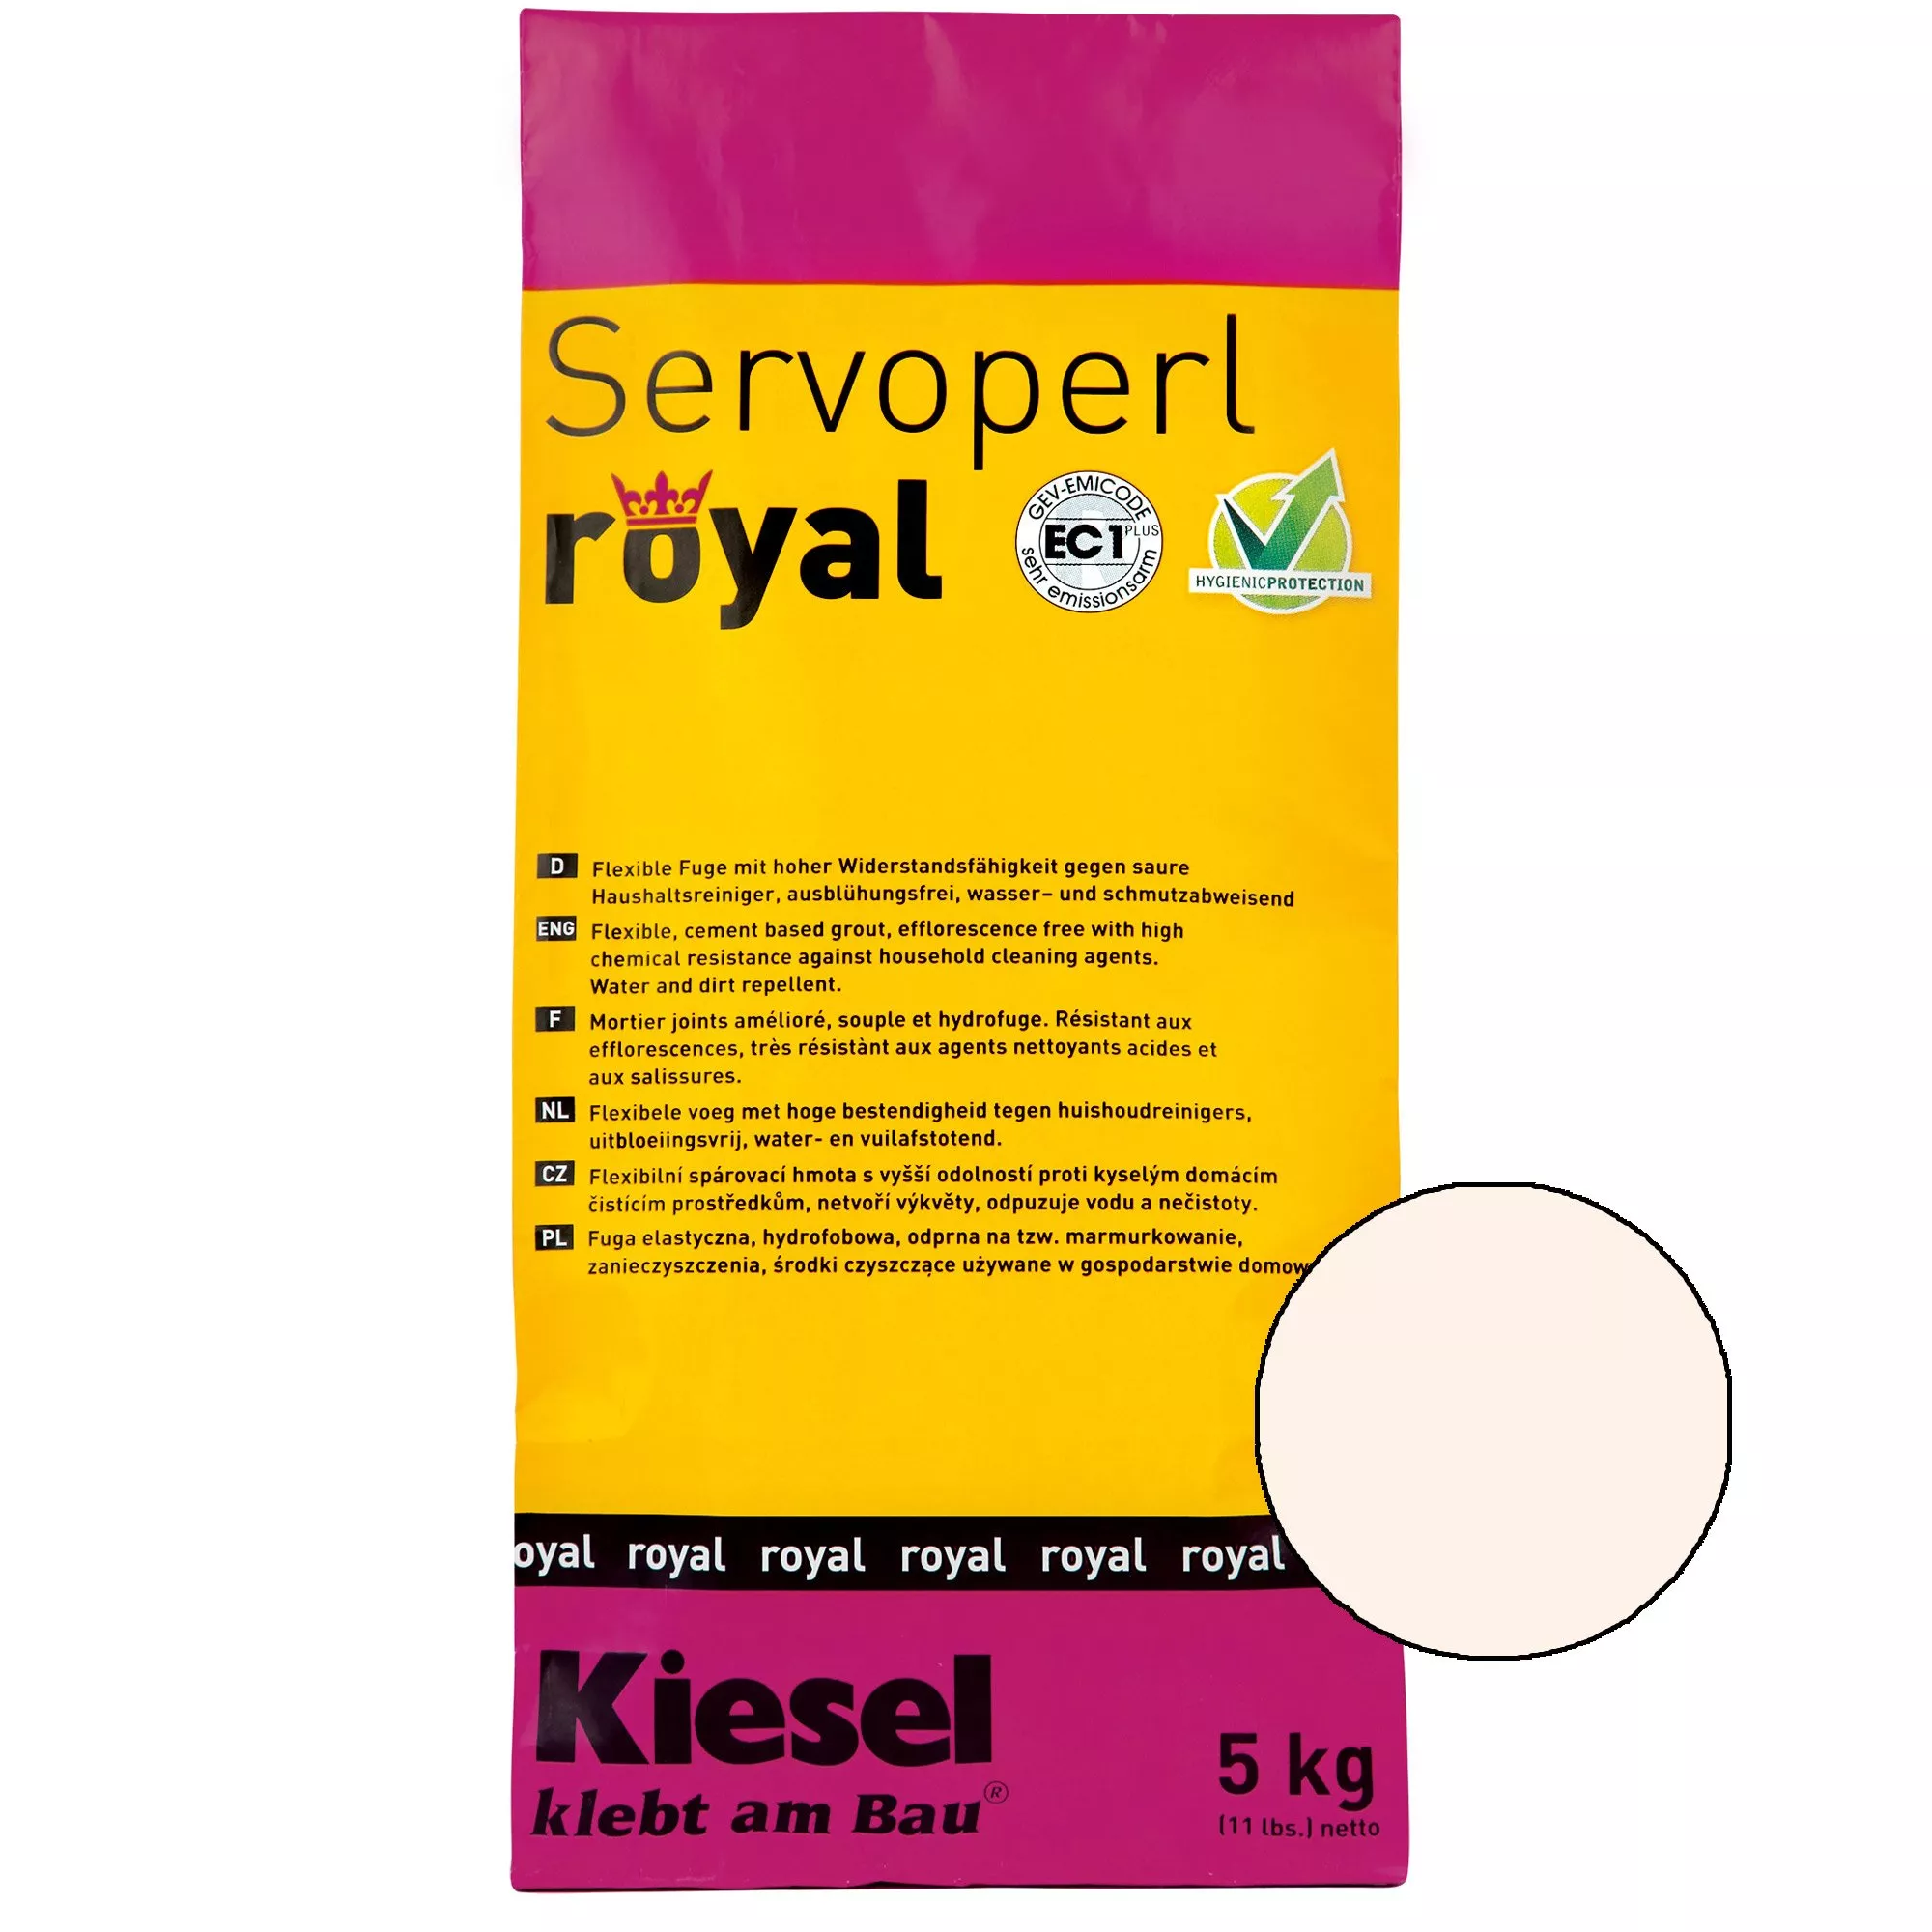 Kiesel Servoperl royal - fugemasse - 5 kg Pergamon